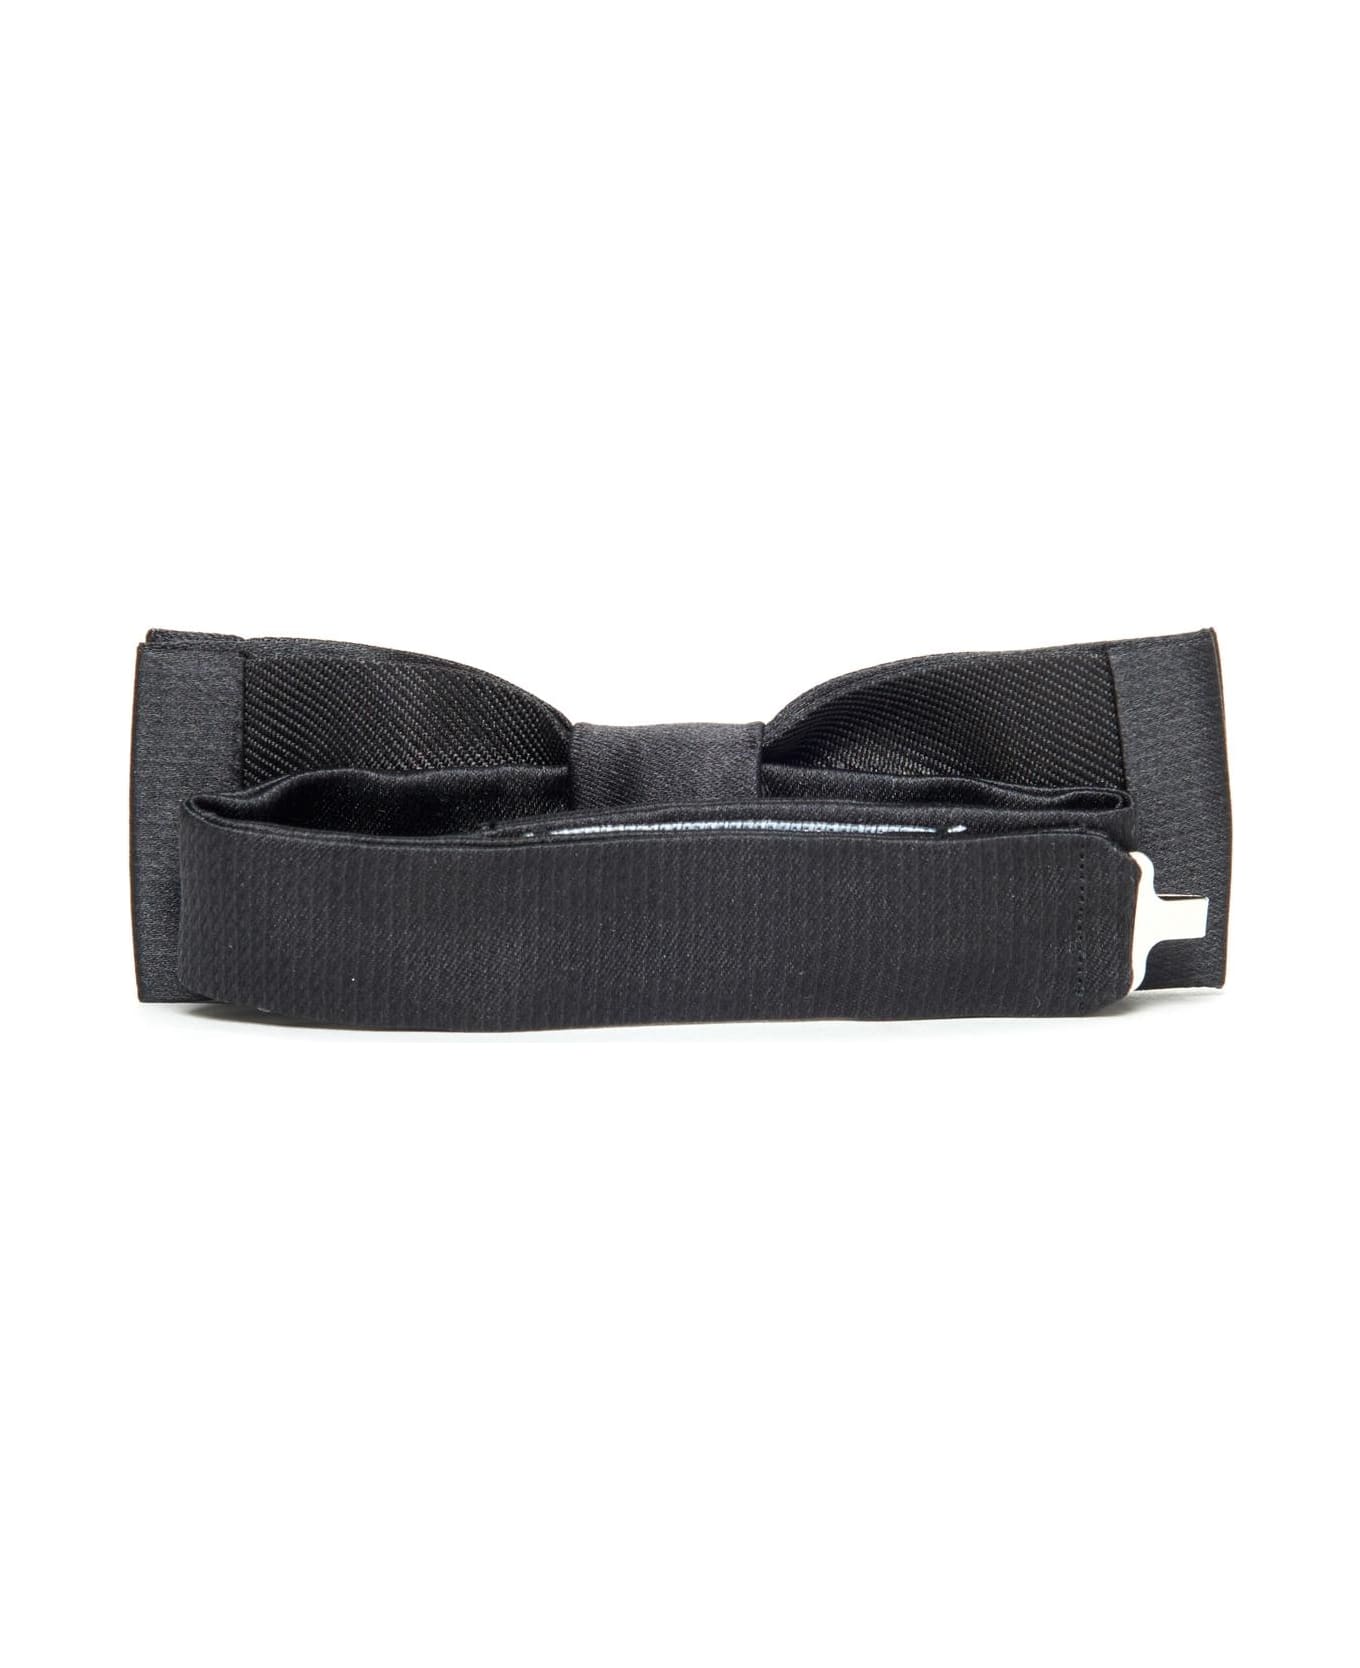 Dsquared2 Black Bow Tie - Black